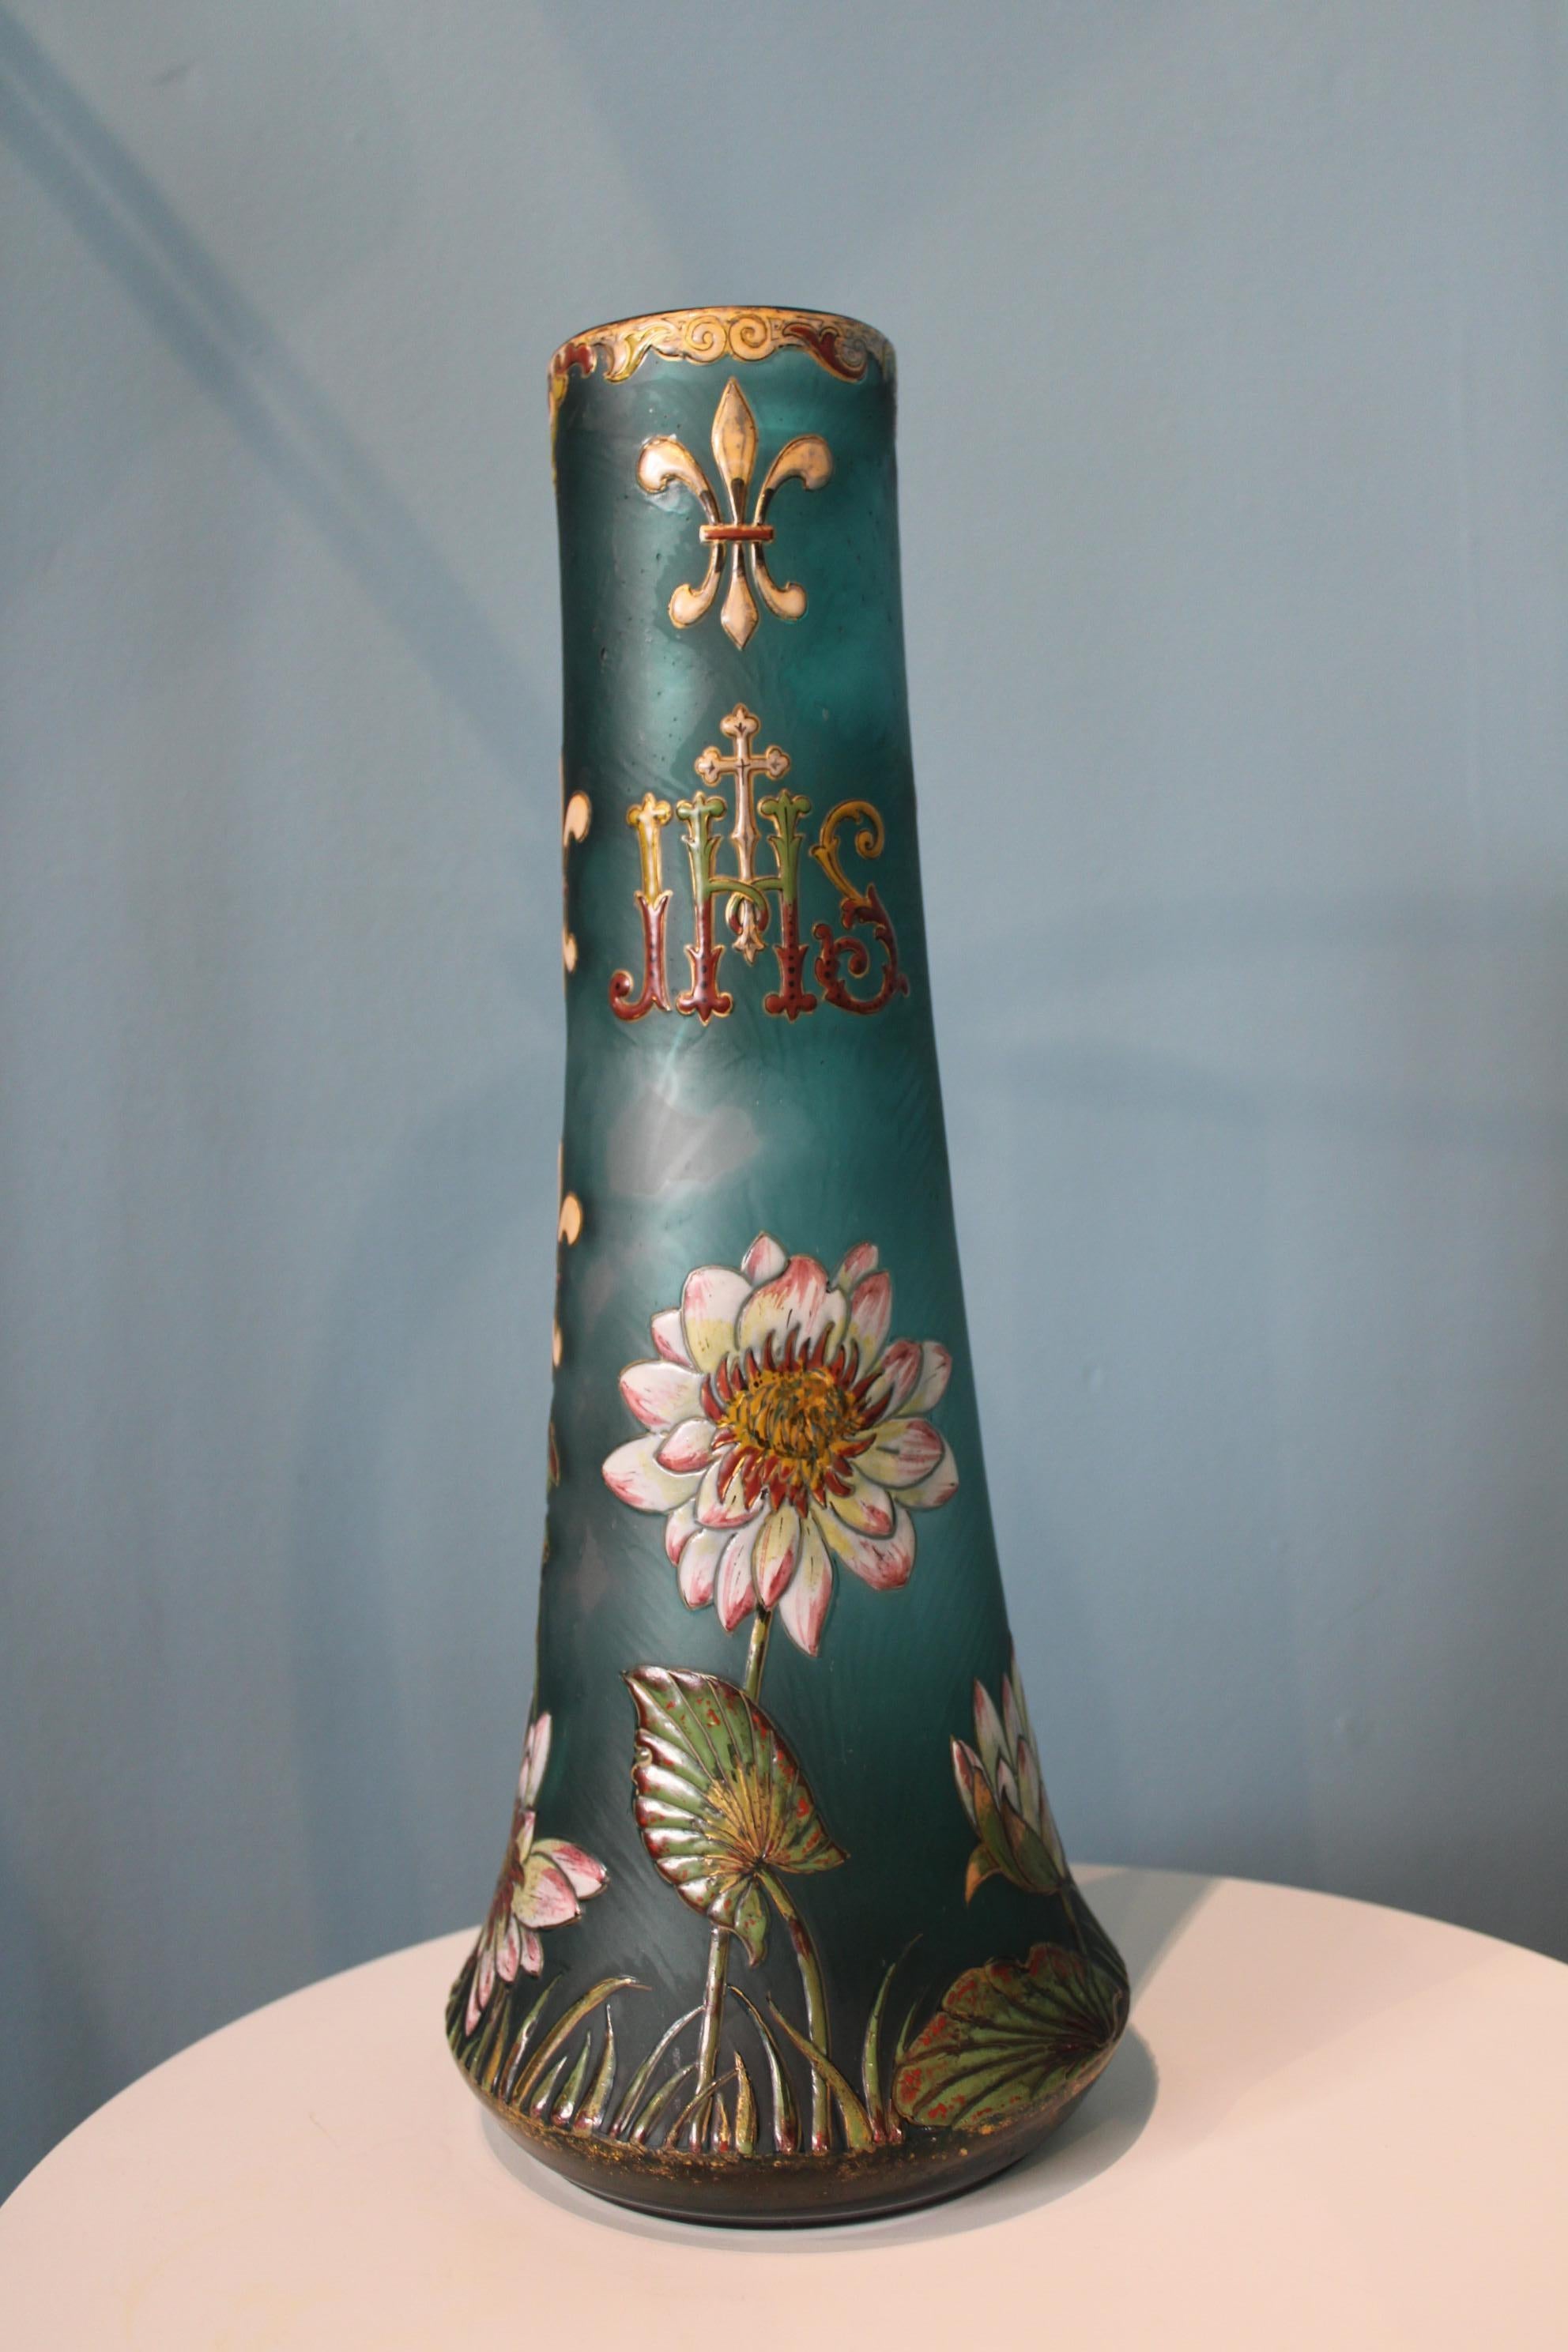 French Burgun, Schverer & Cie glass vase, France